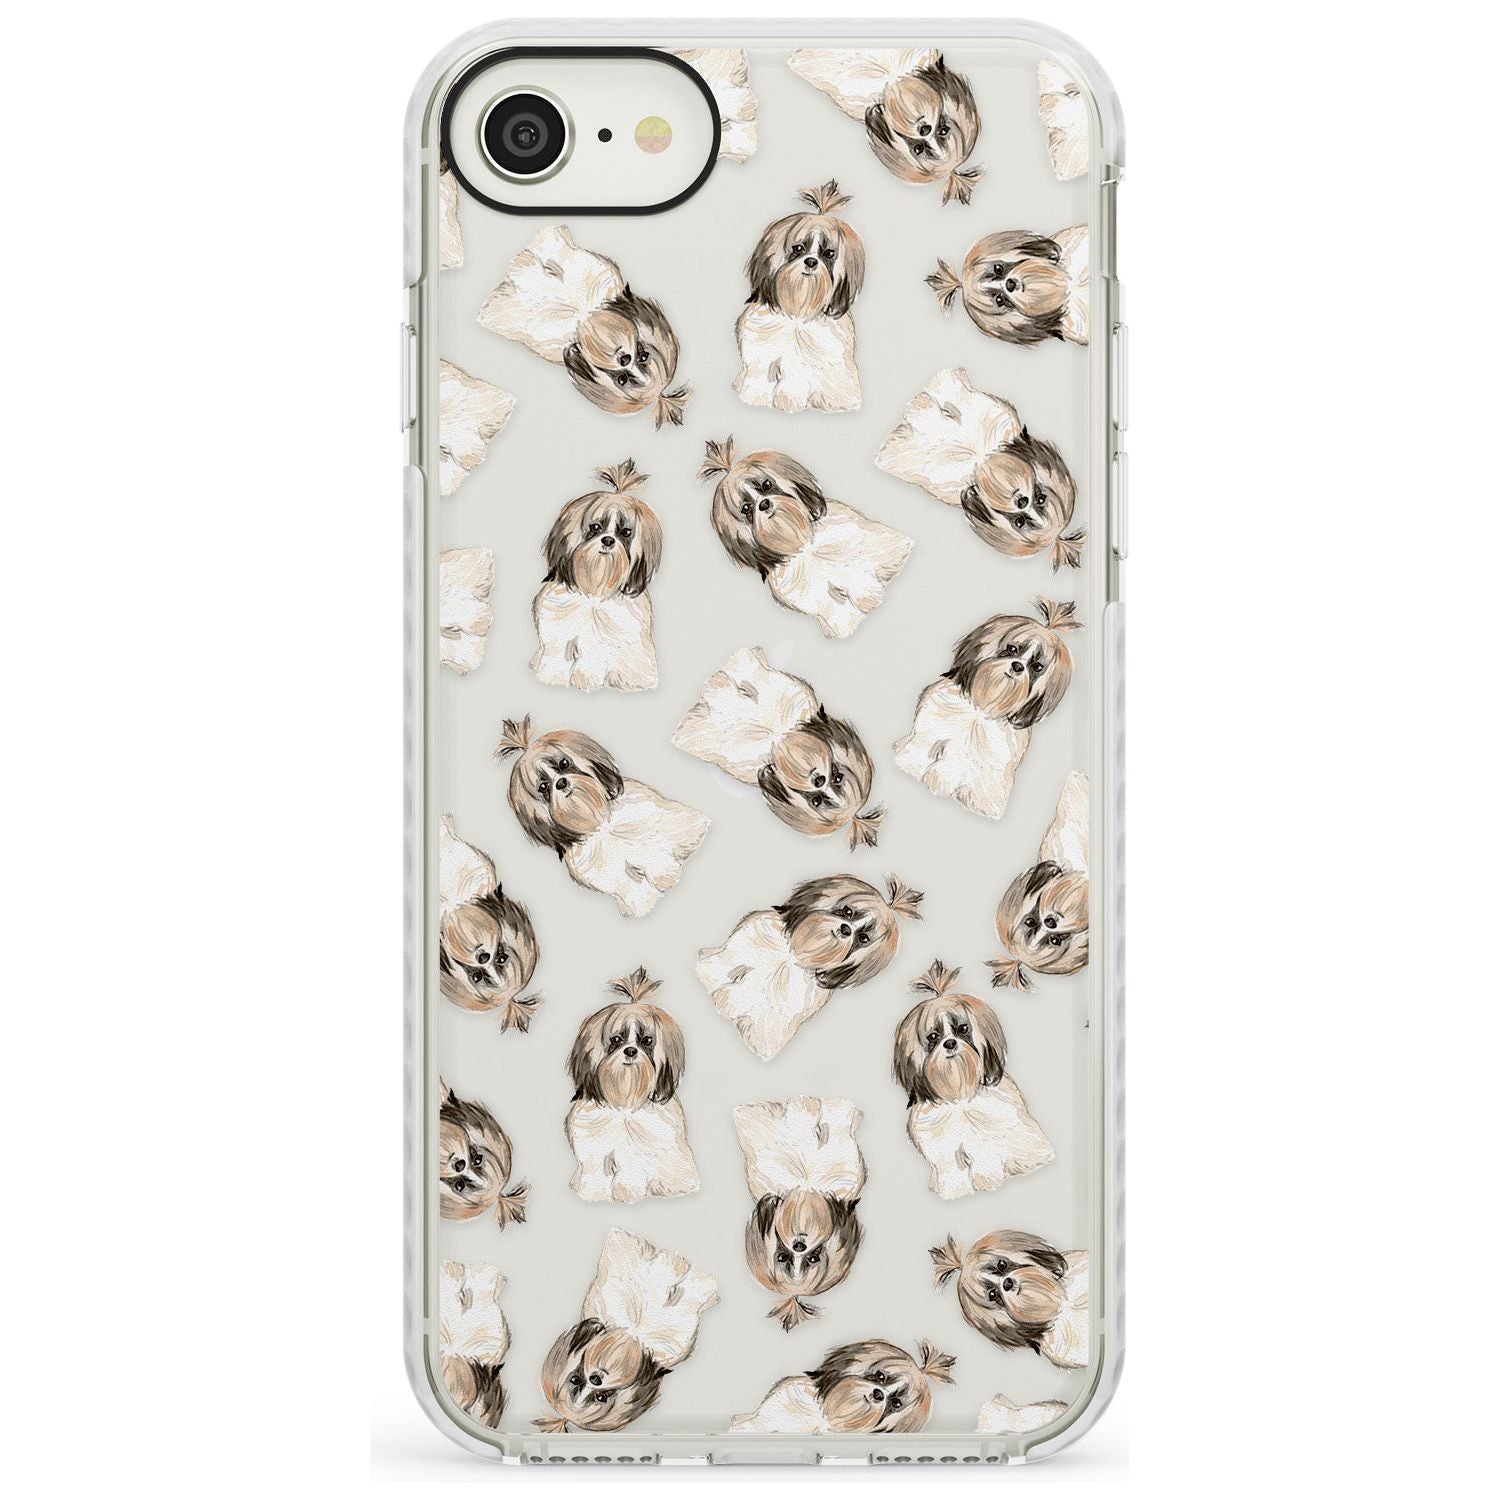 Shih tzu (Long Hair) Watercolour Dog Pattern Impact Phone Case for iPhone SE 8 7 Plus